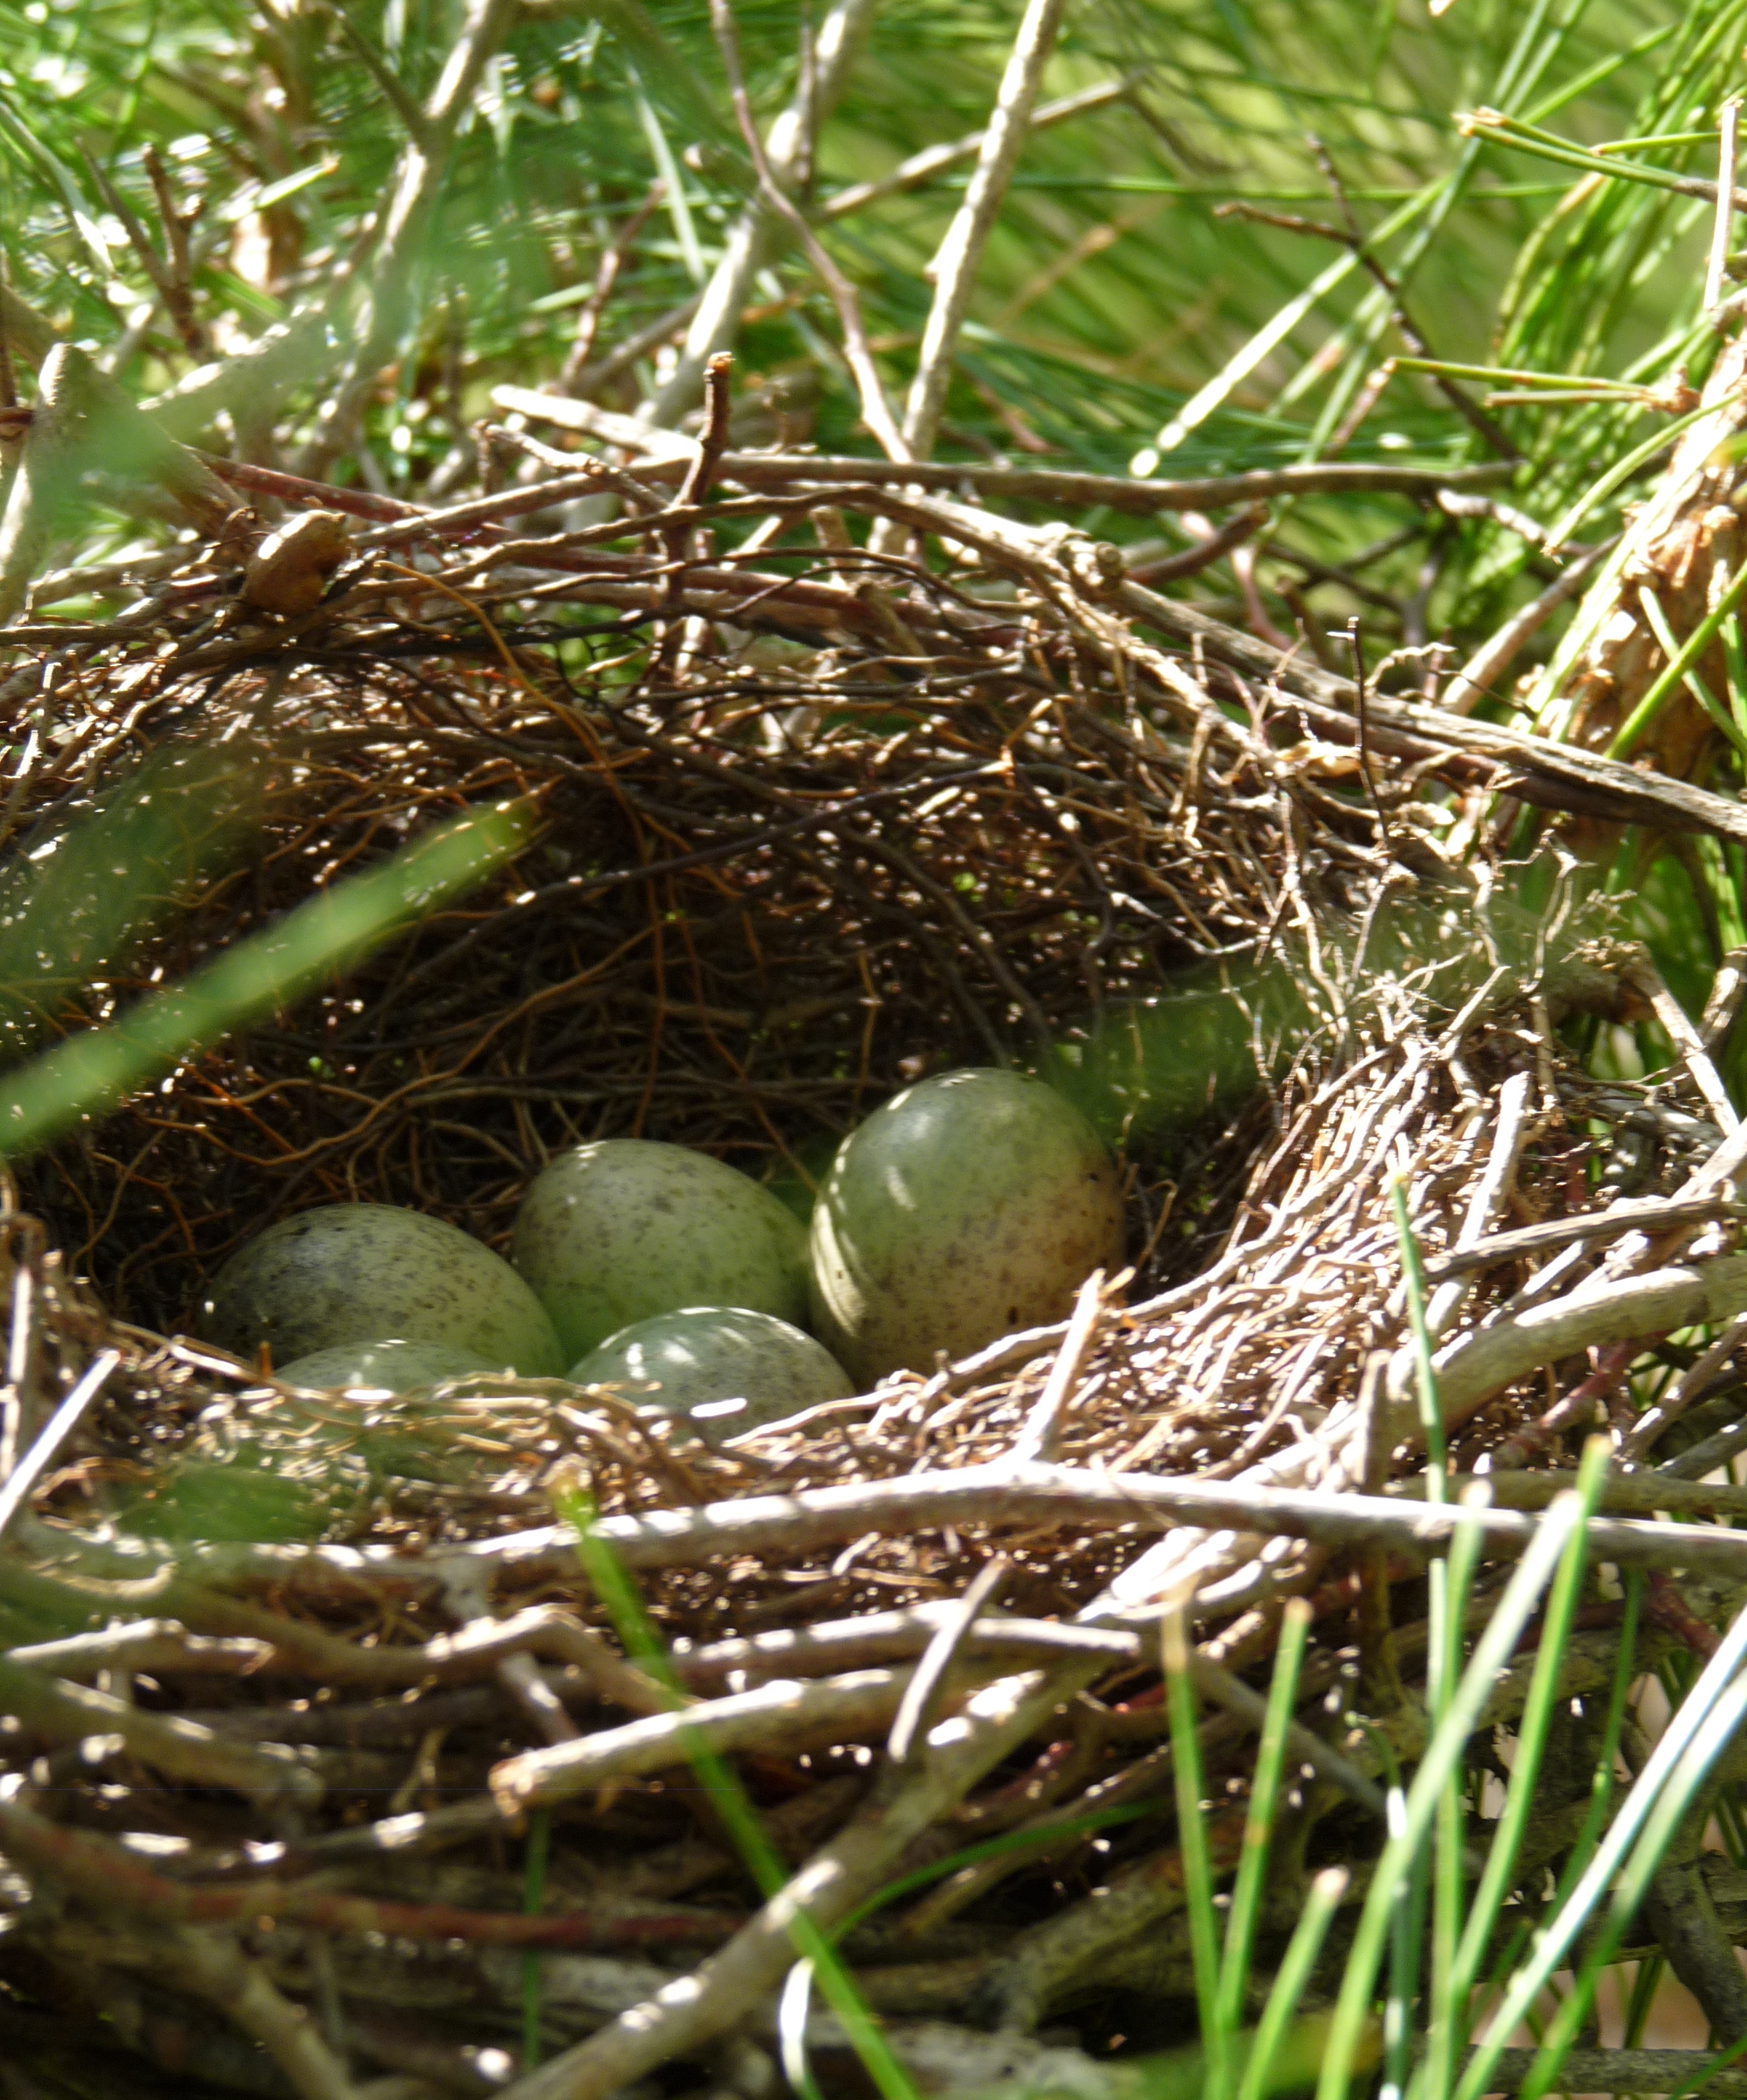 File:Blue Jays nest.jpg - Wikipedia